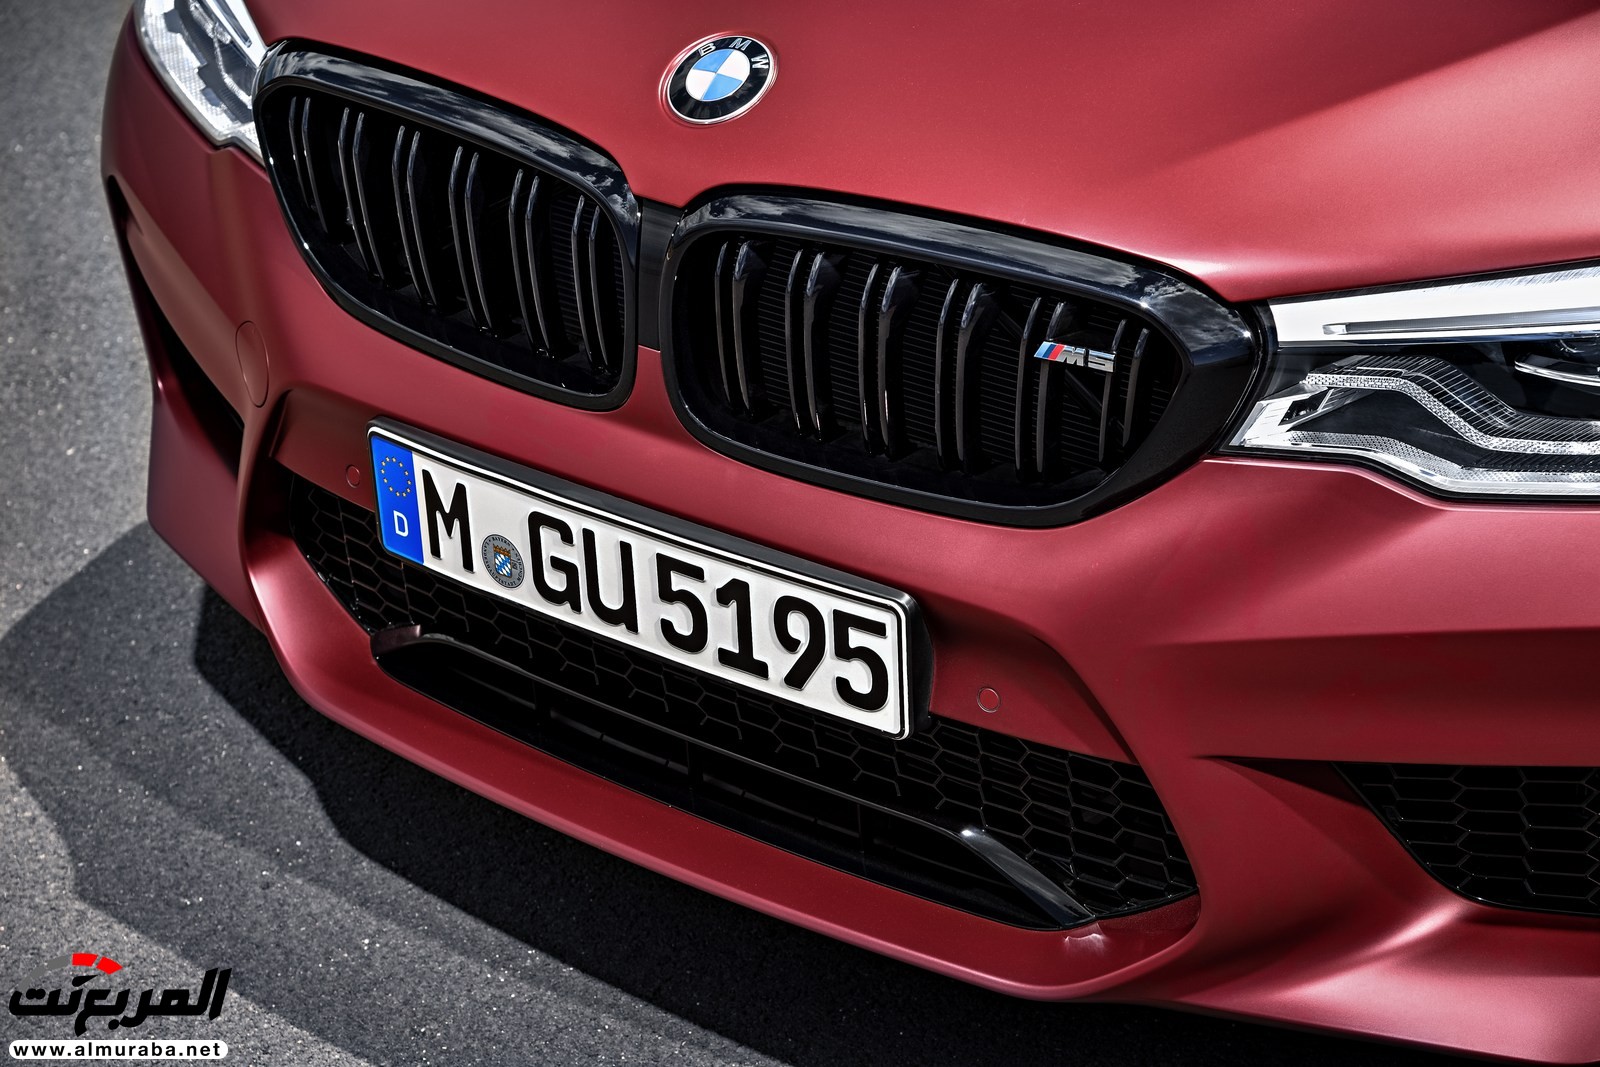 بي ام دبليو M5 2018 تكشف نفسها رسمياً بقوة ٦٠٠ حصان "صور ومواصفات" BMW 185